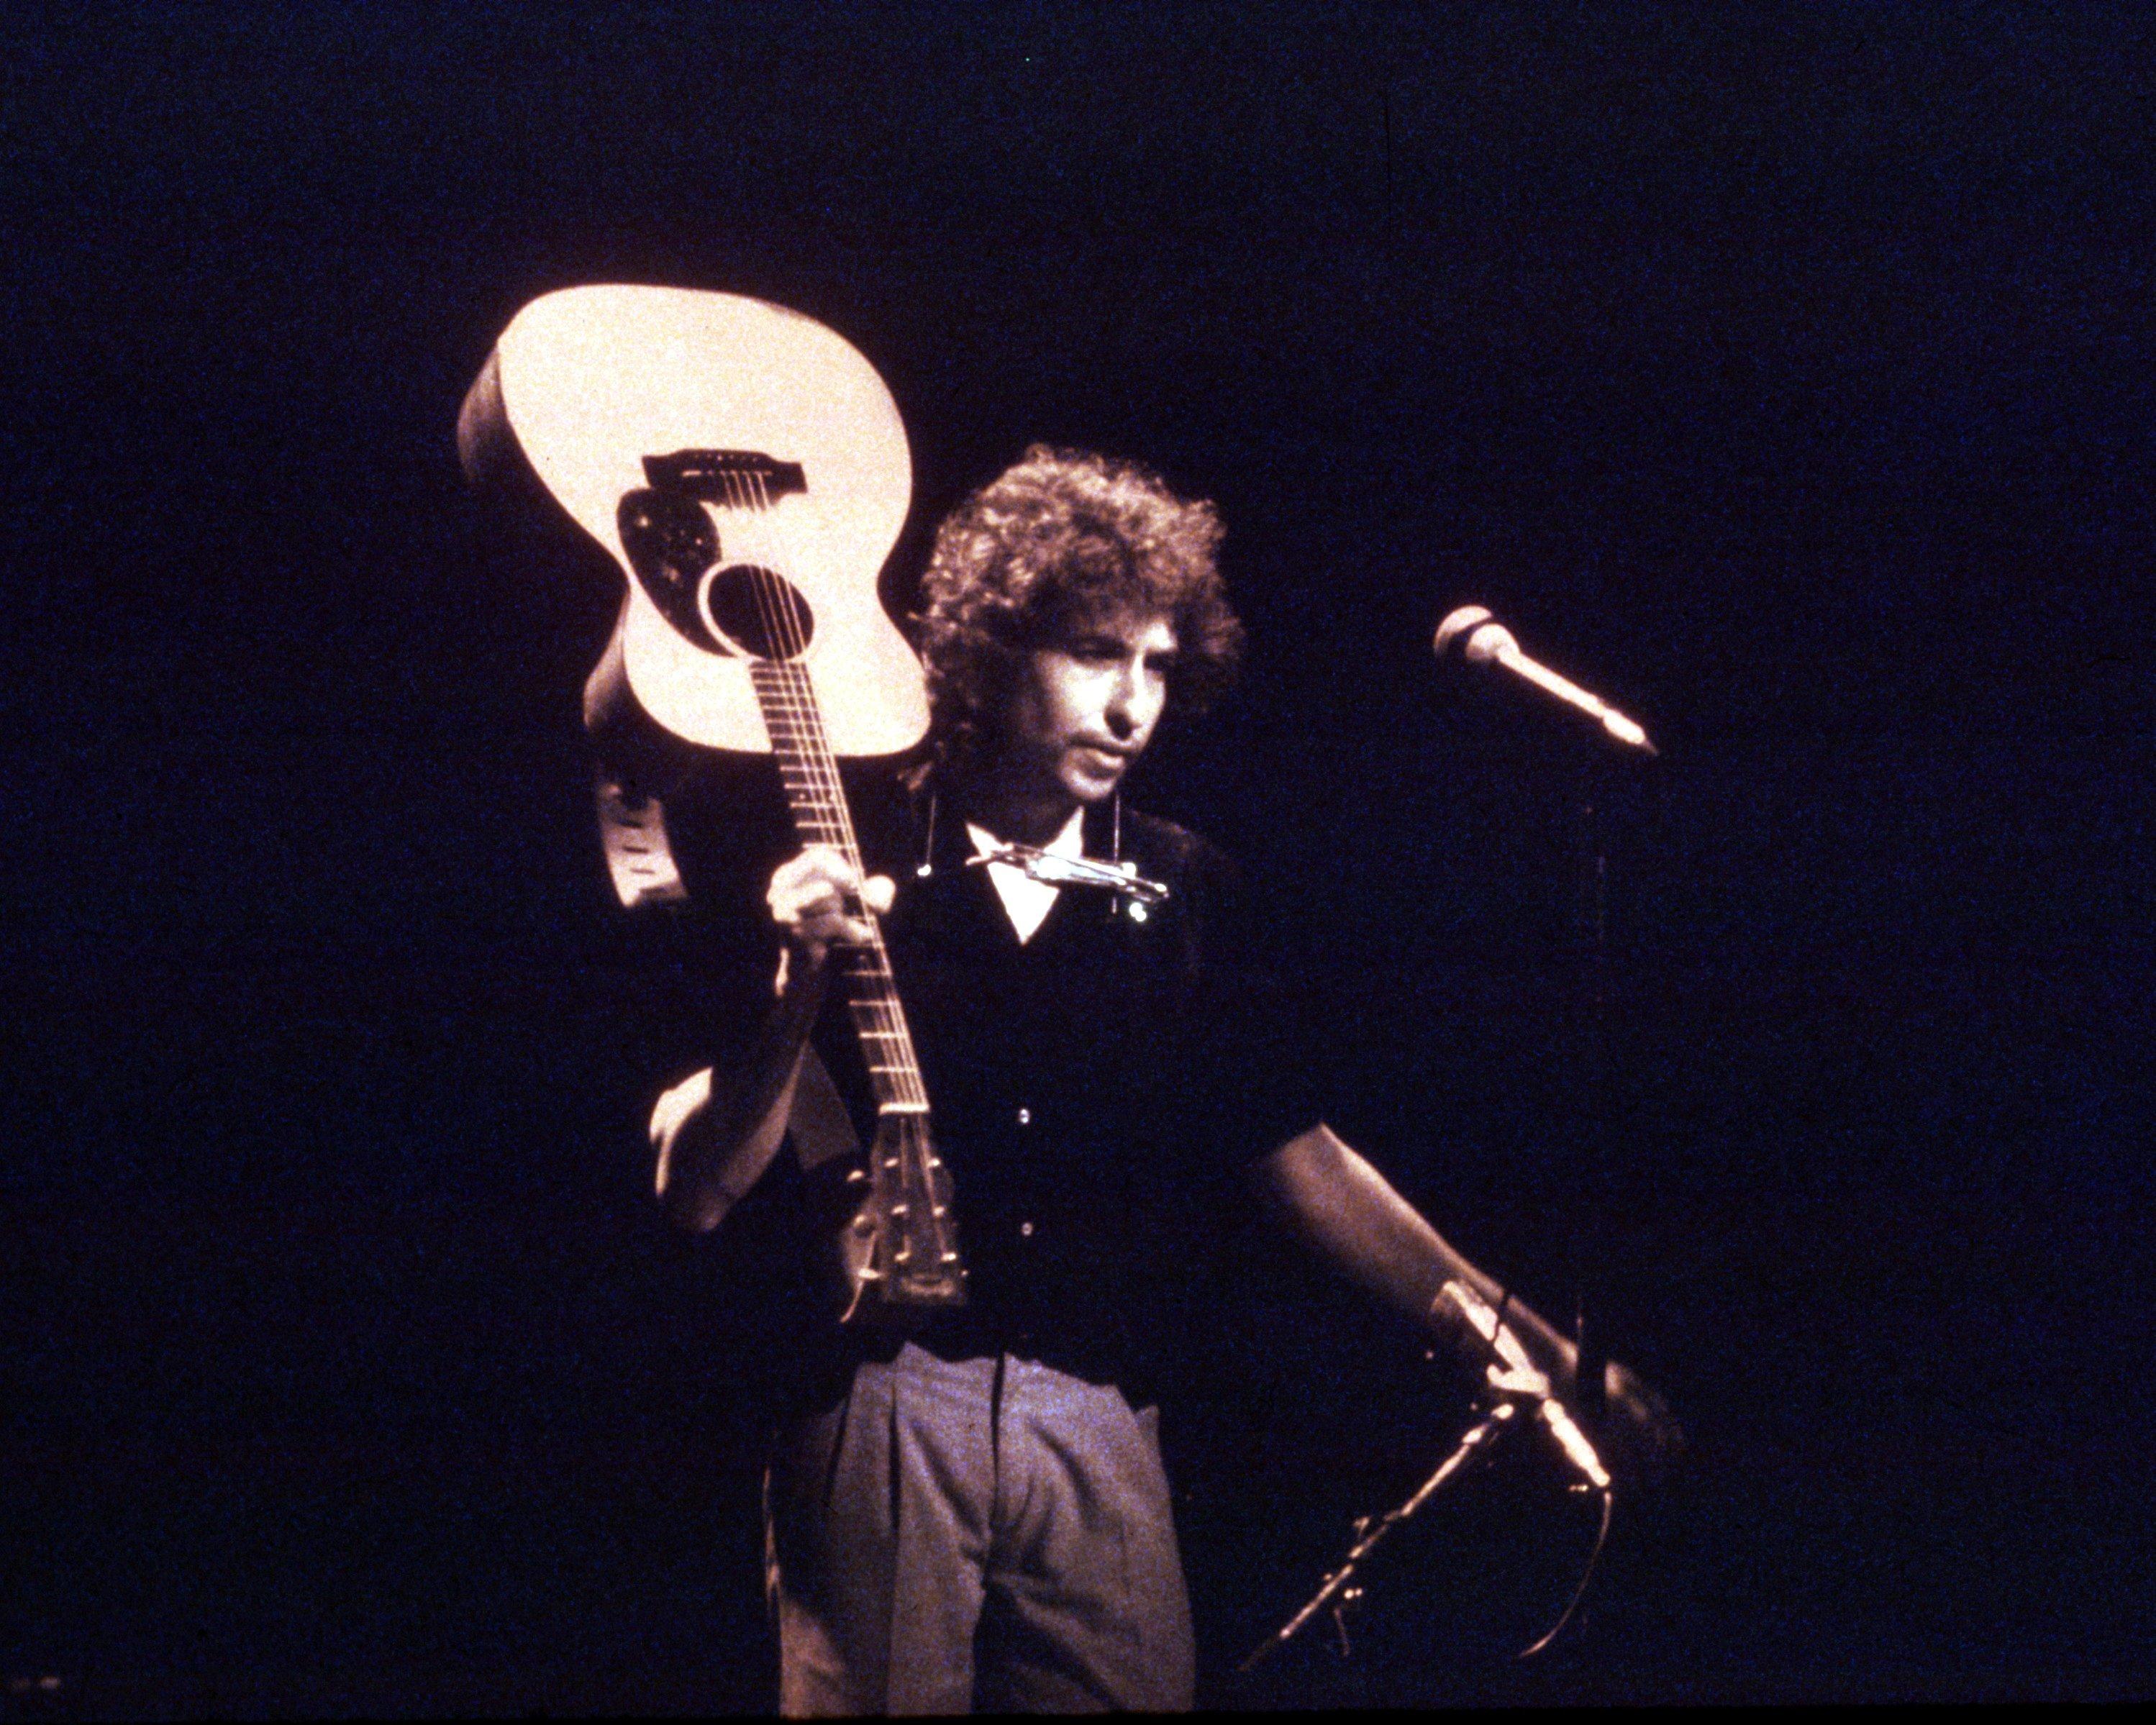 Watch: Trailer for Bob Dylan Gospel Tour Film 